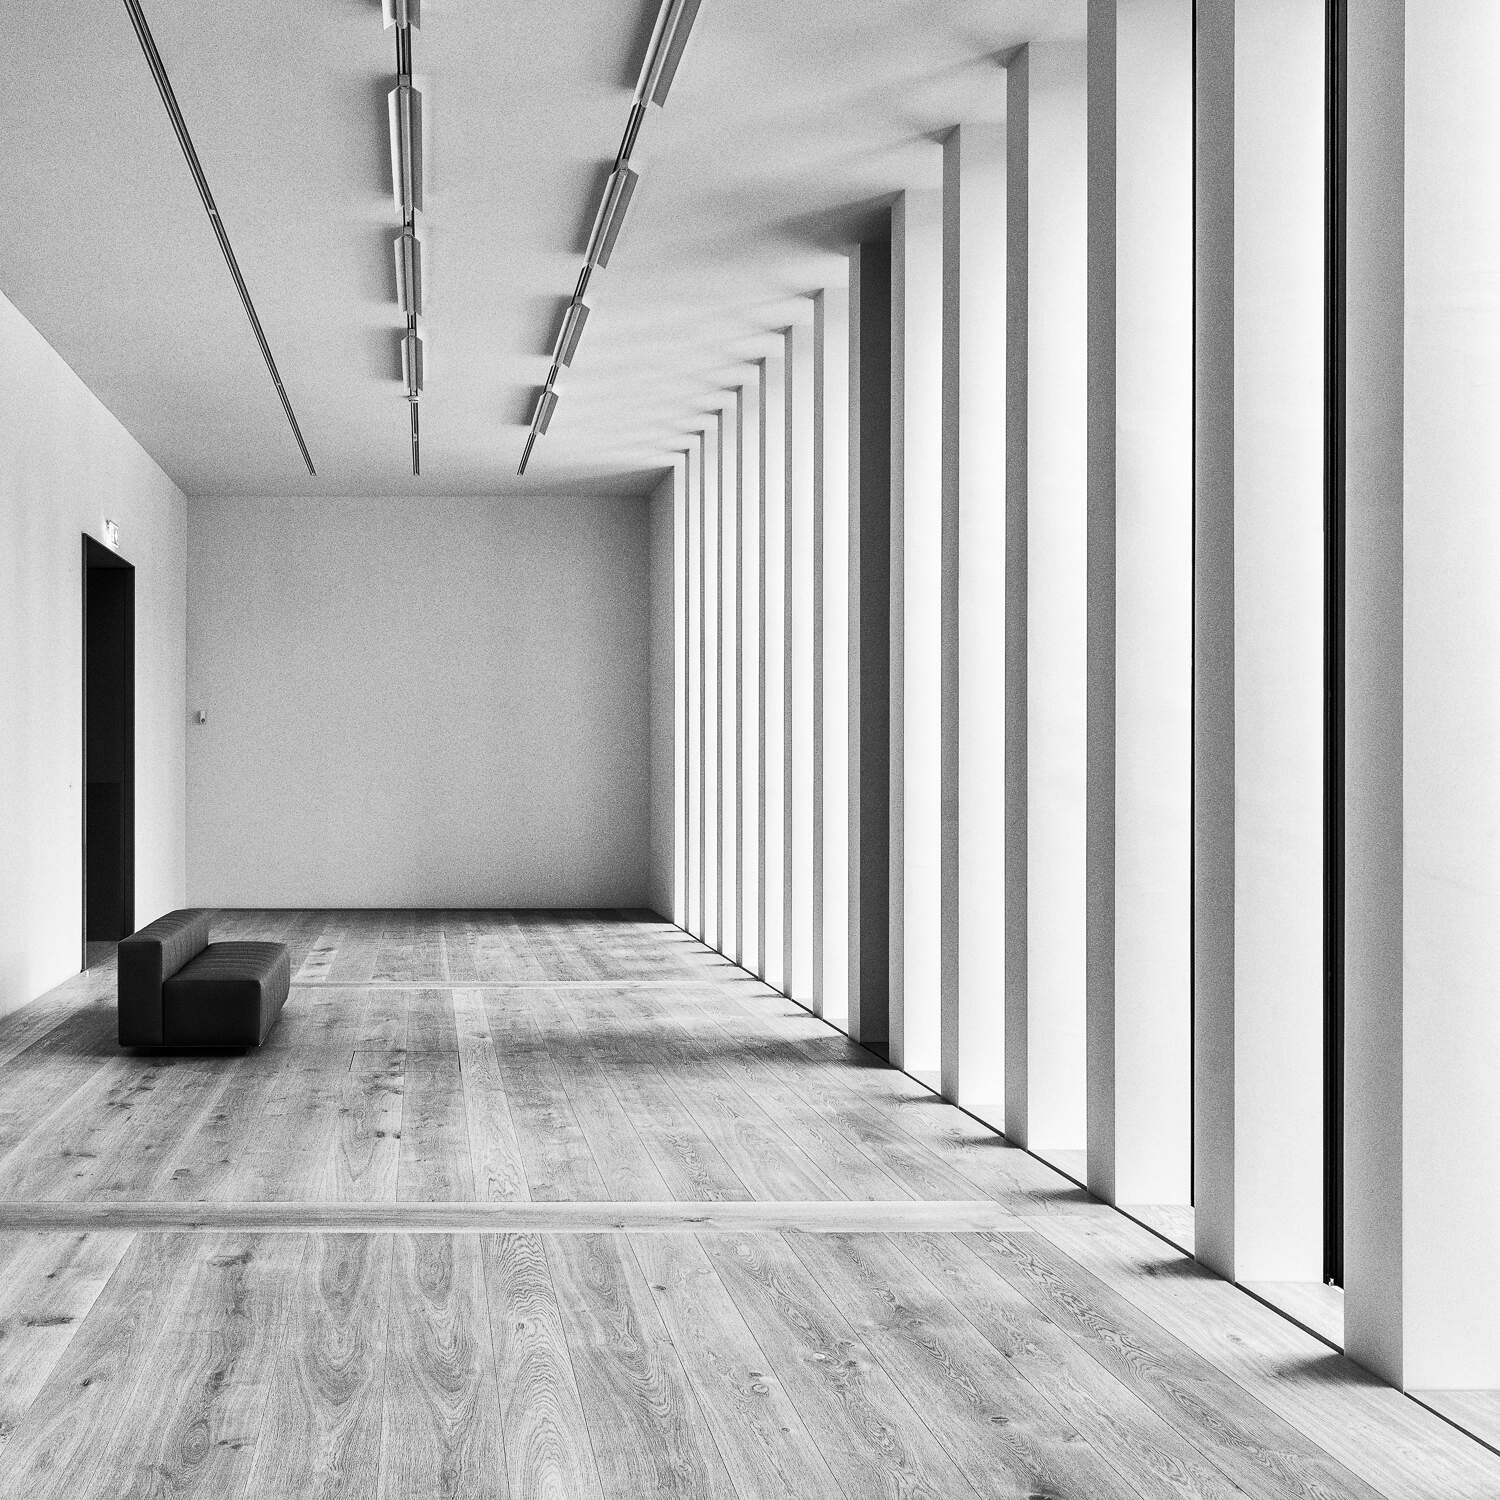 Kunstmuseum Zürich, David Chipperfield